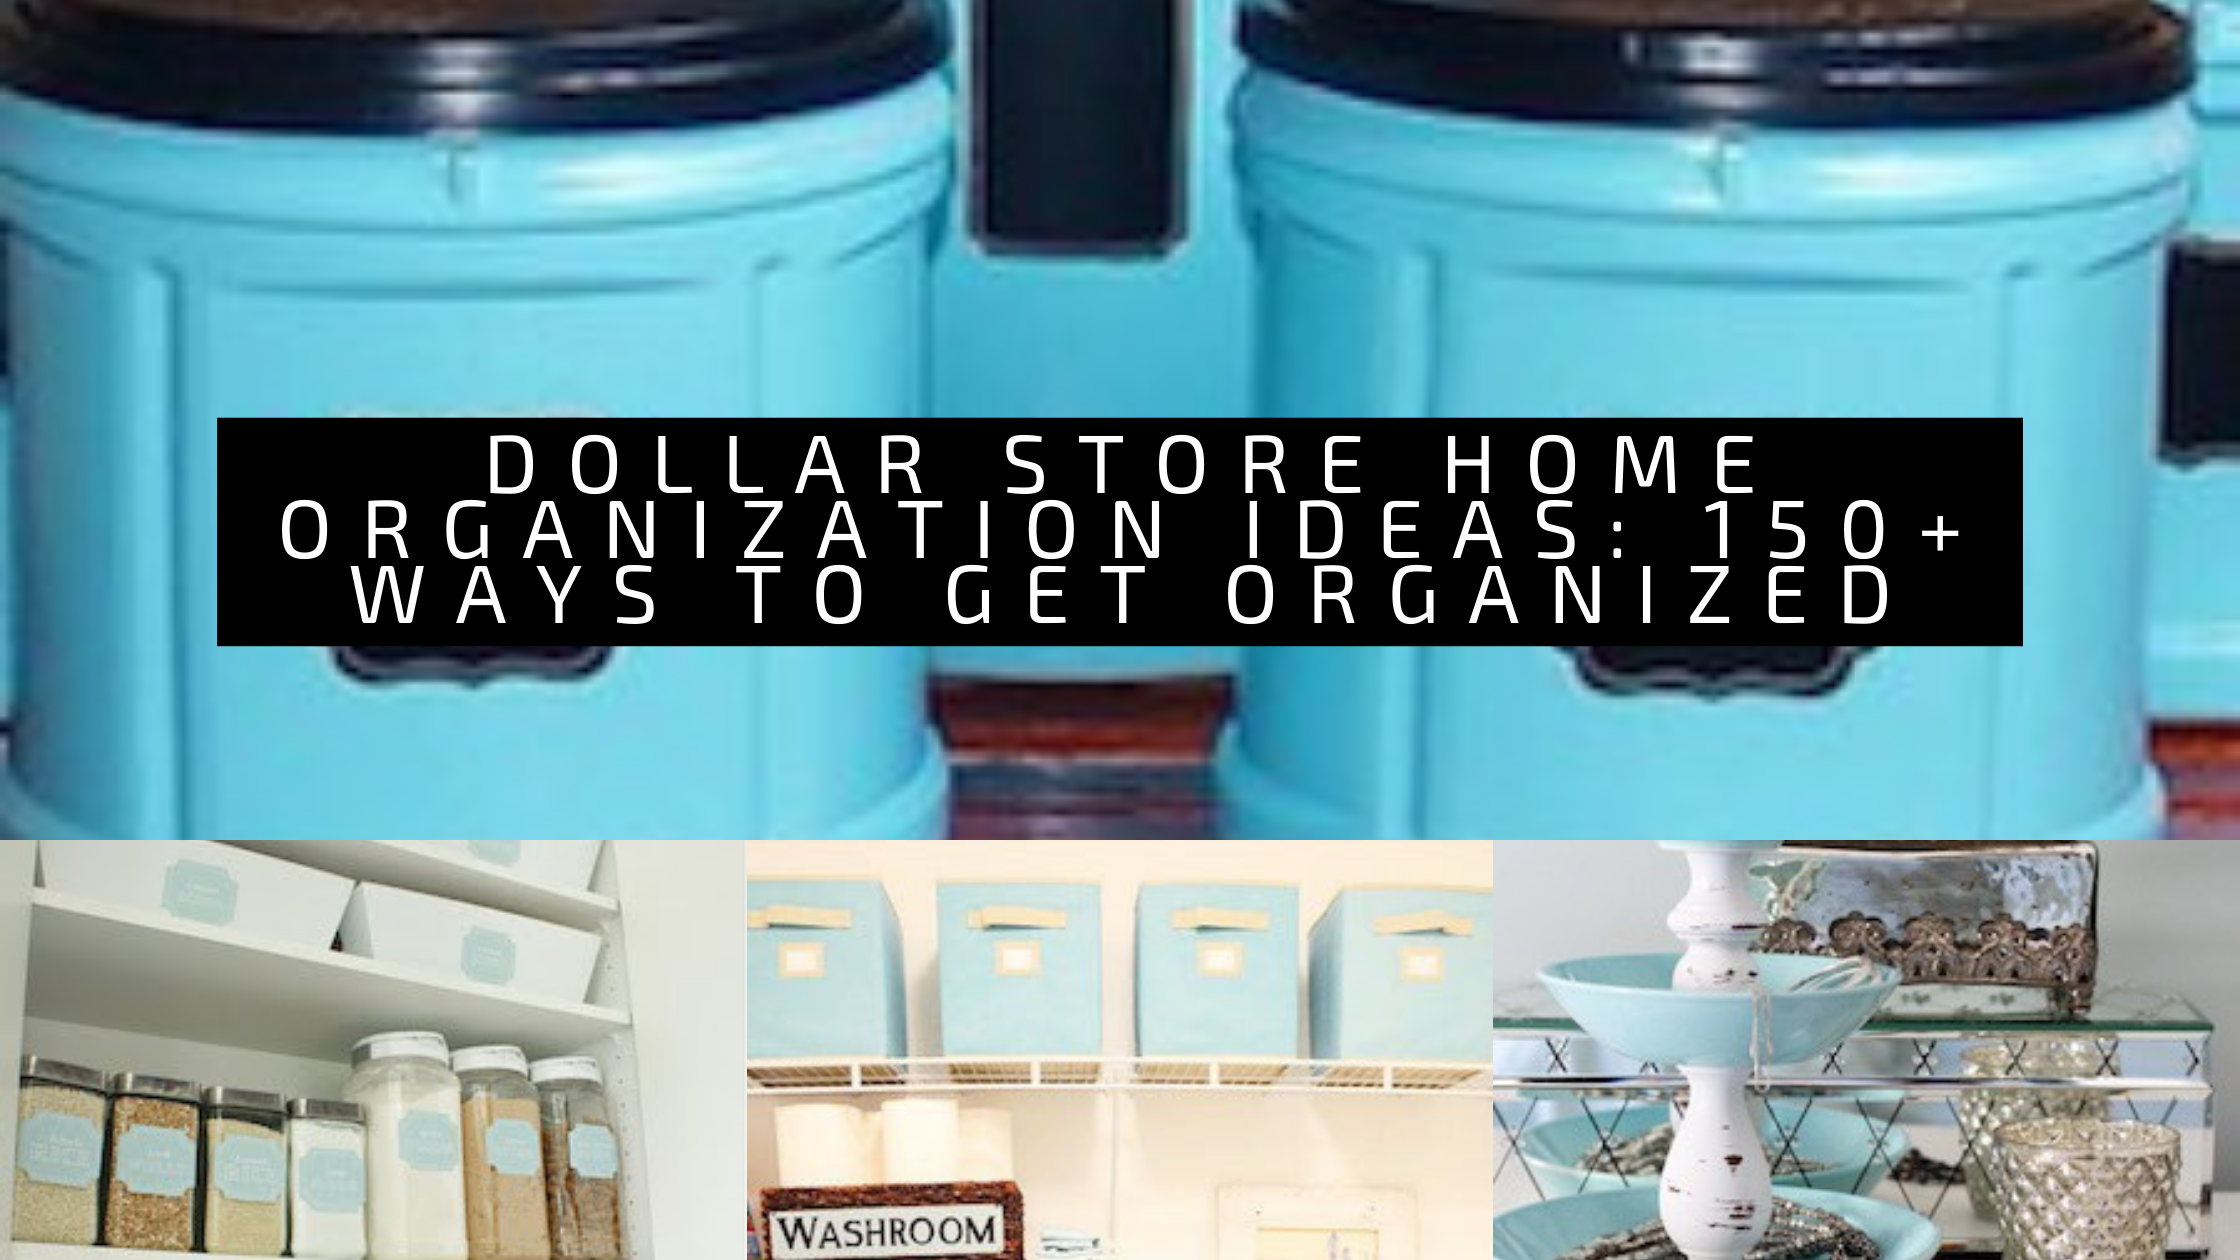 Dollar Store Home Organization Ideas: 150+ Ways to Get Organized 24